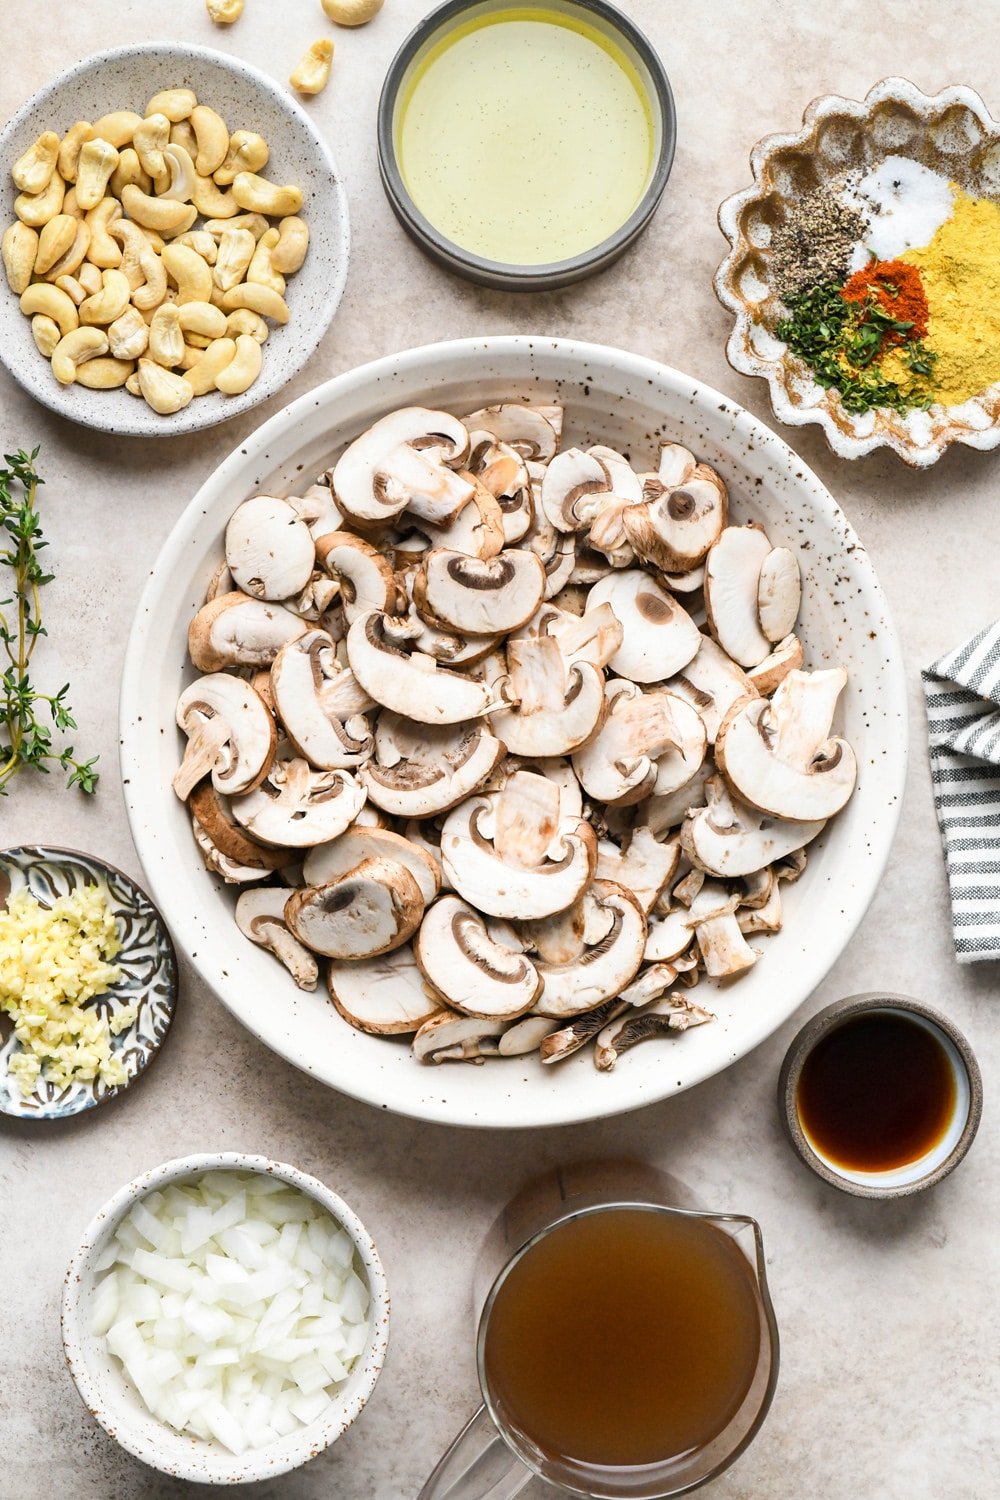 Gluten free mushroom gravy ingredients in various ceramics on a light brown background.